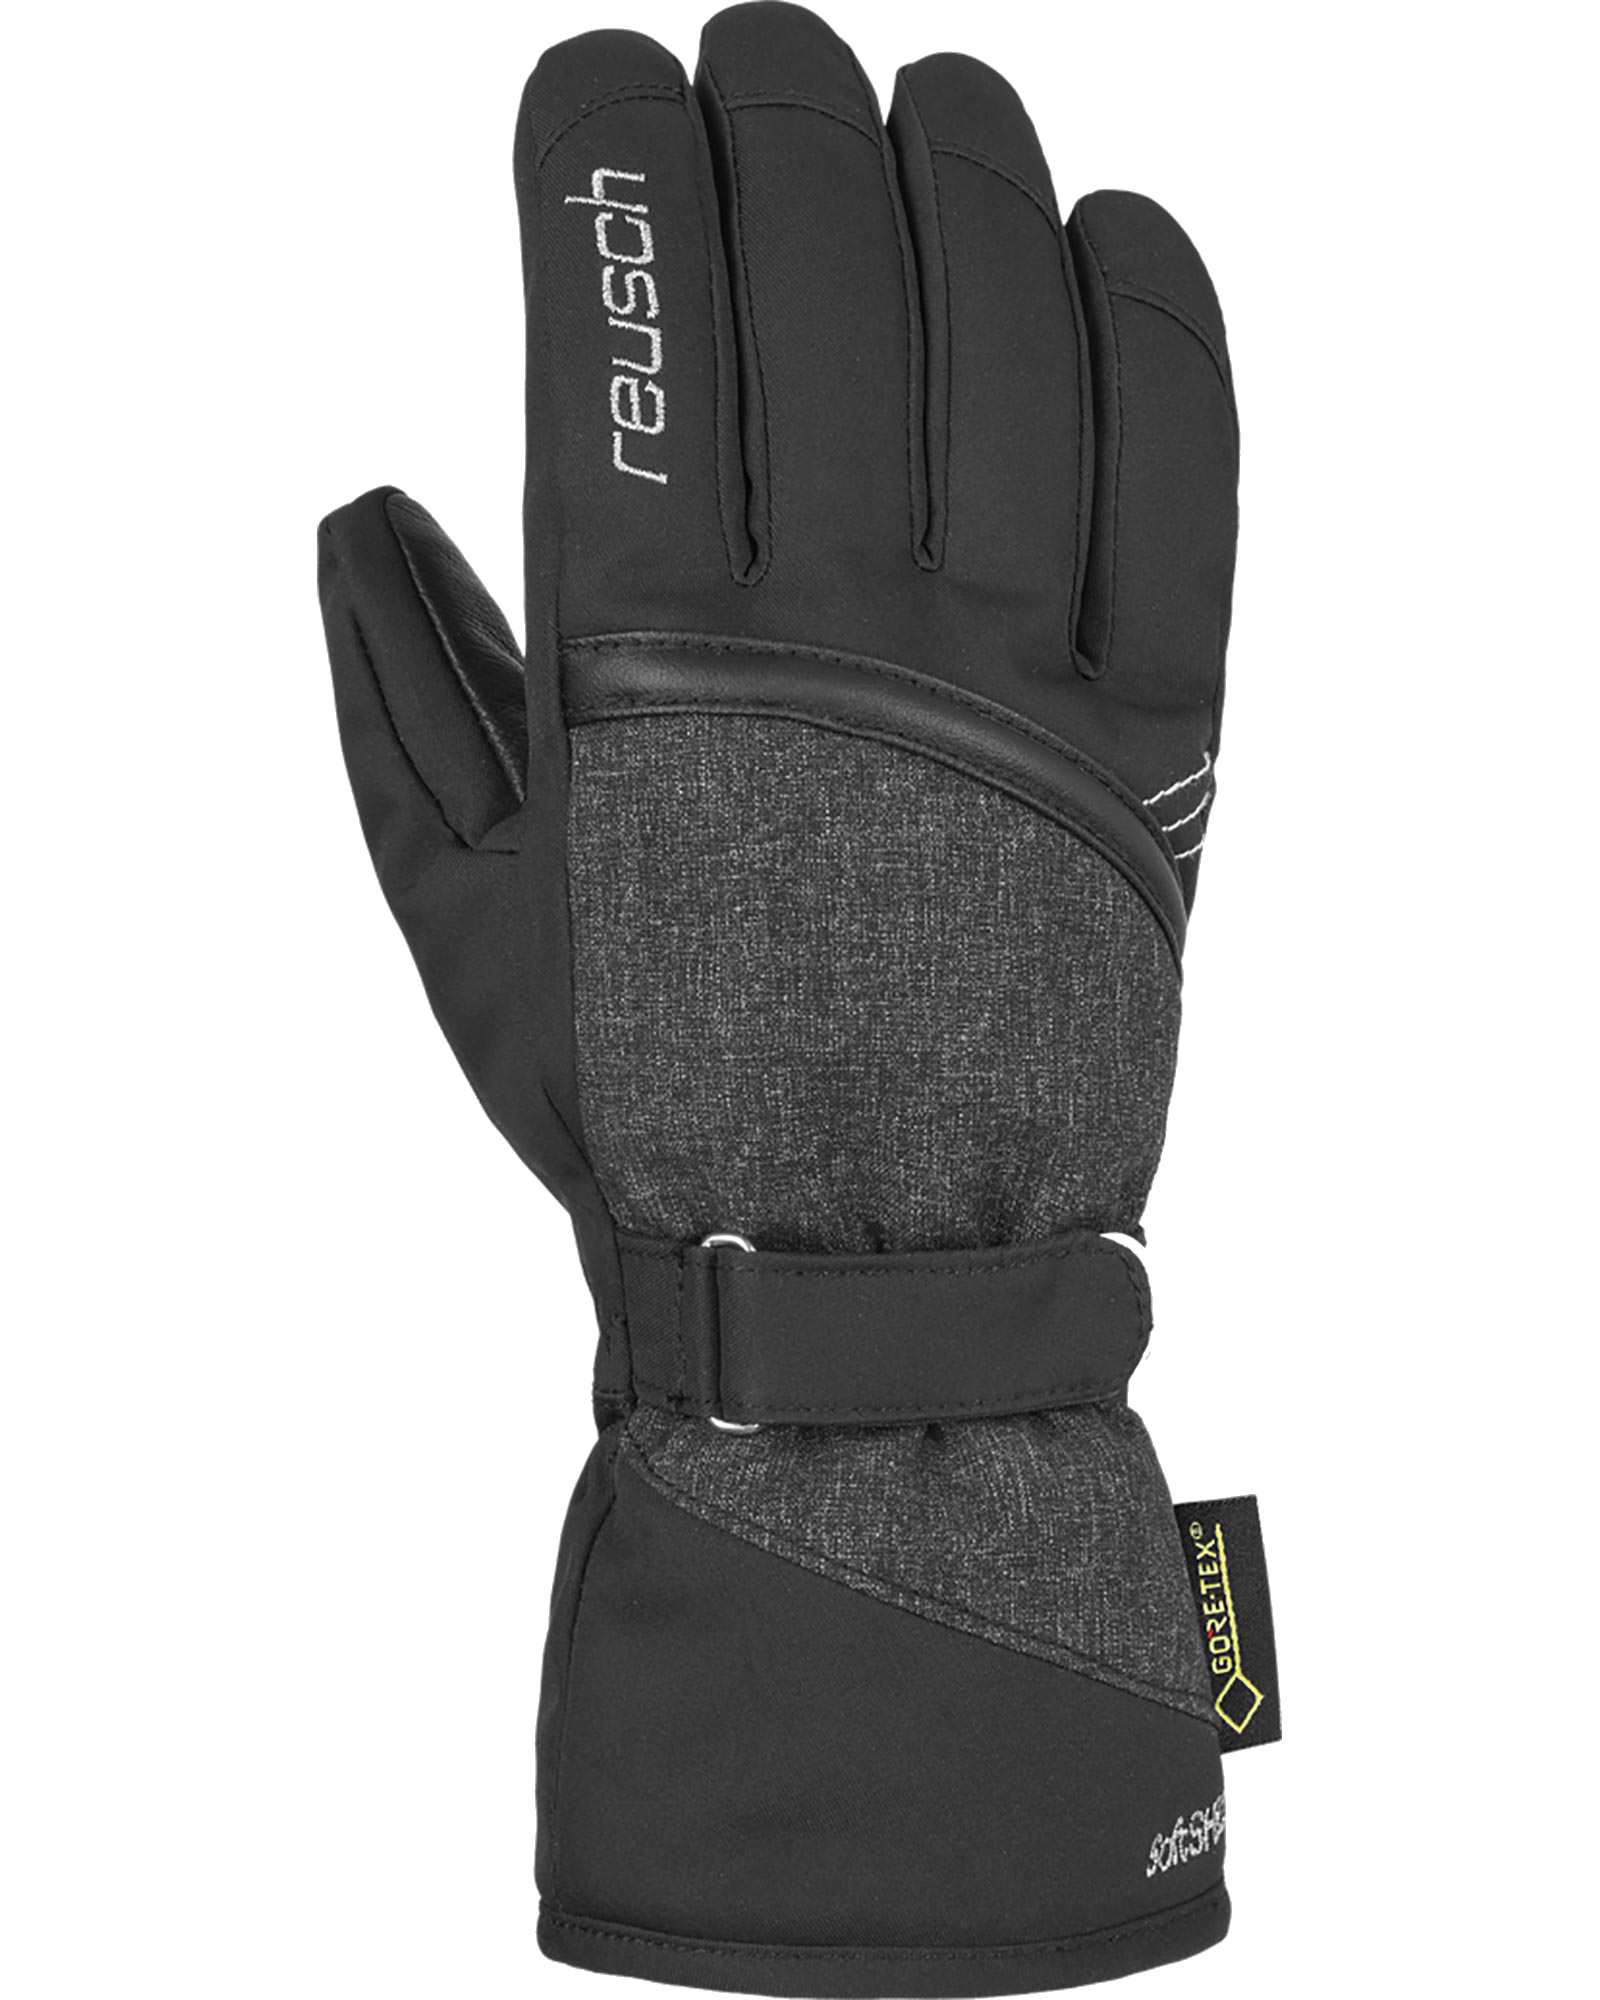 Reusch Alexa GORE TEX Women’s Gloves - Black/Grey/Silver Size 6